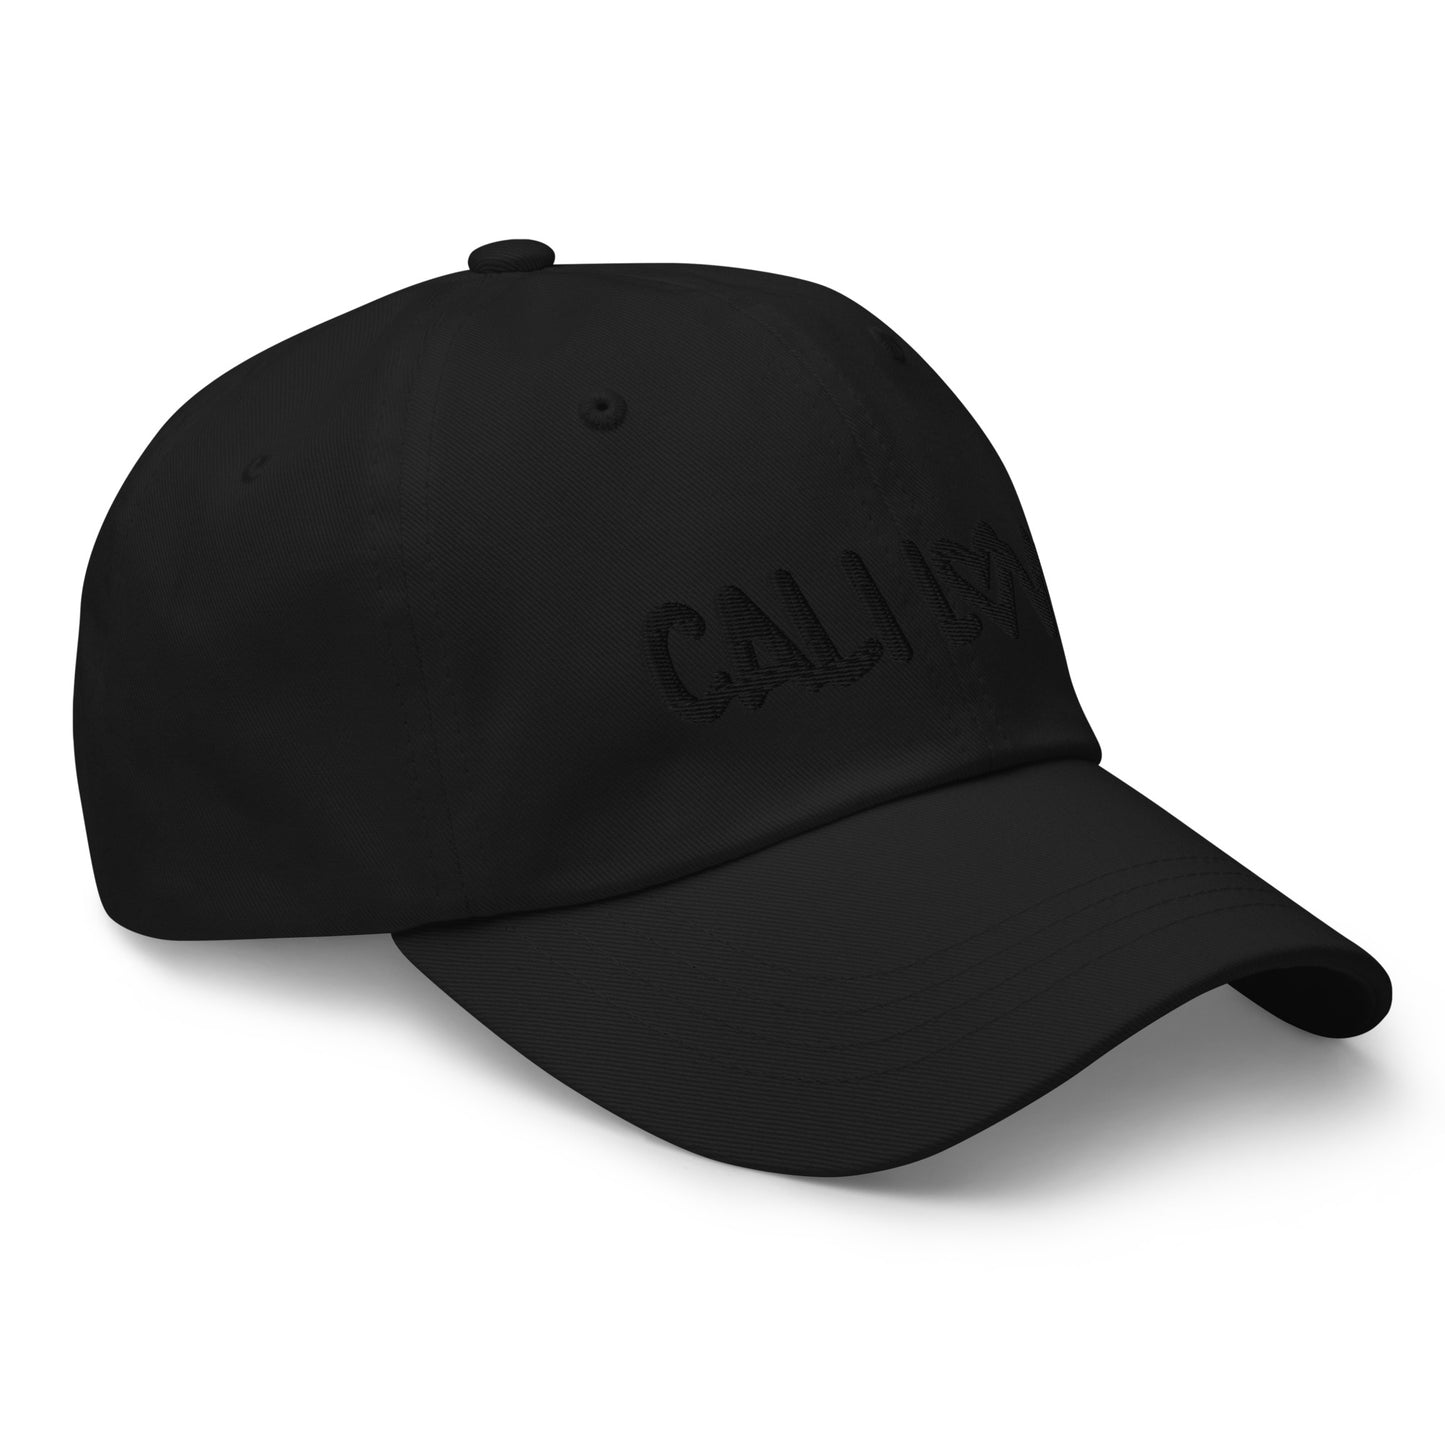 CALI LOVE - YOU hat